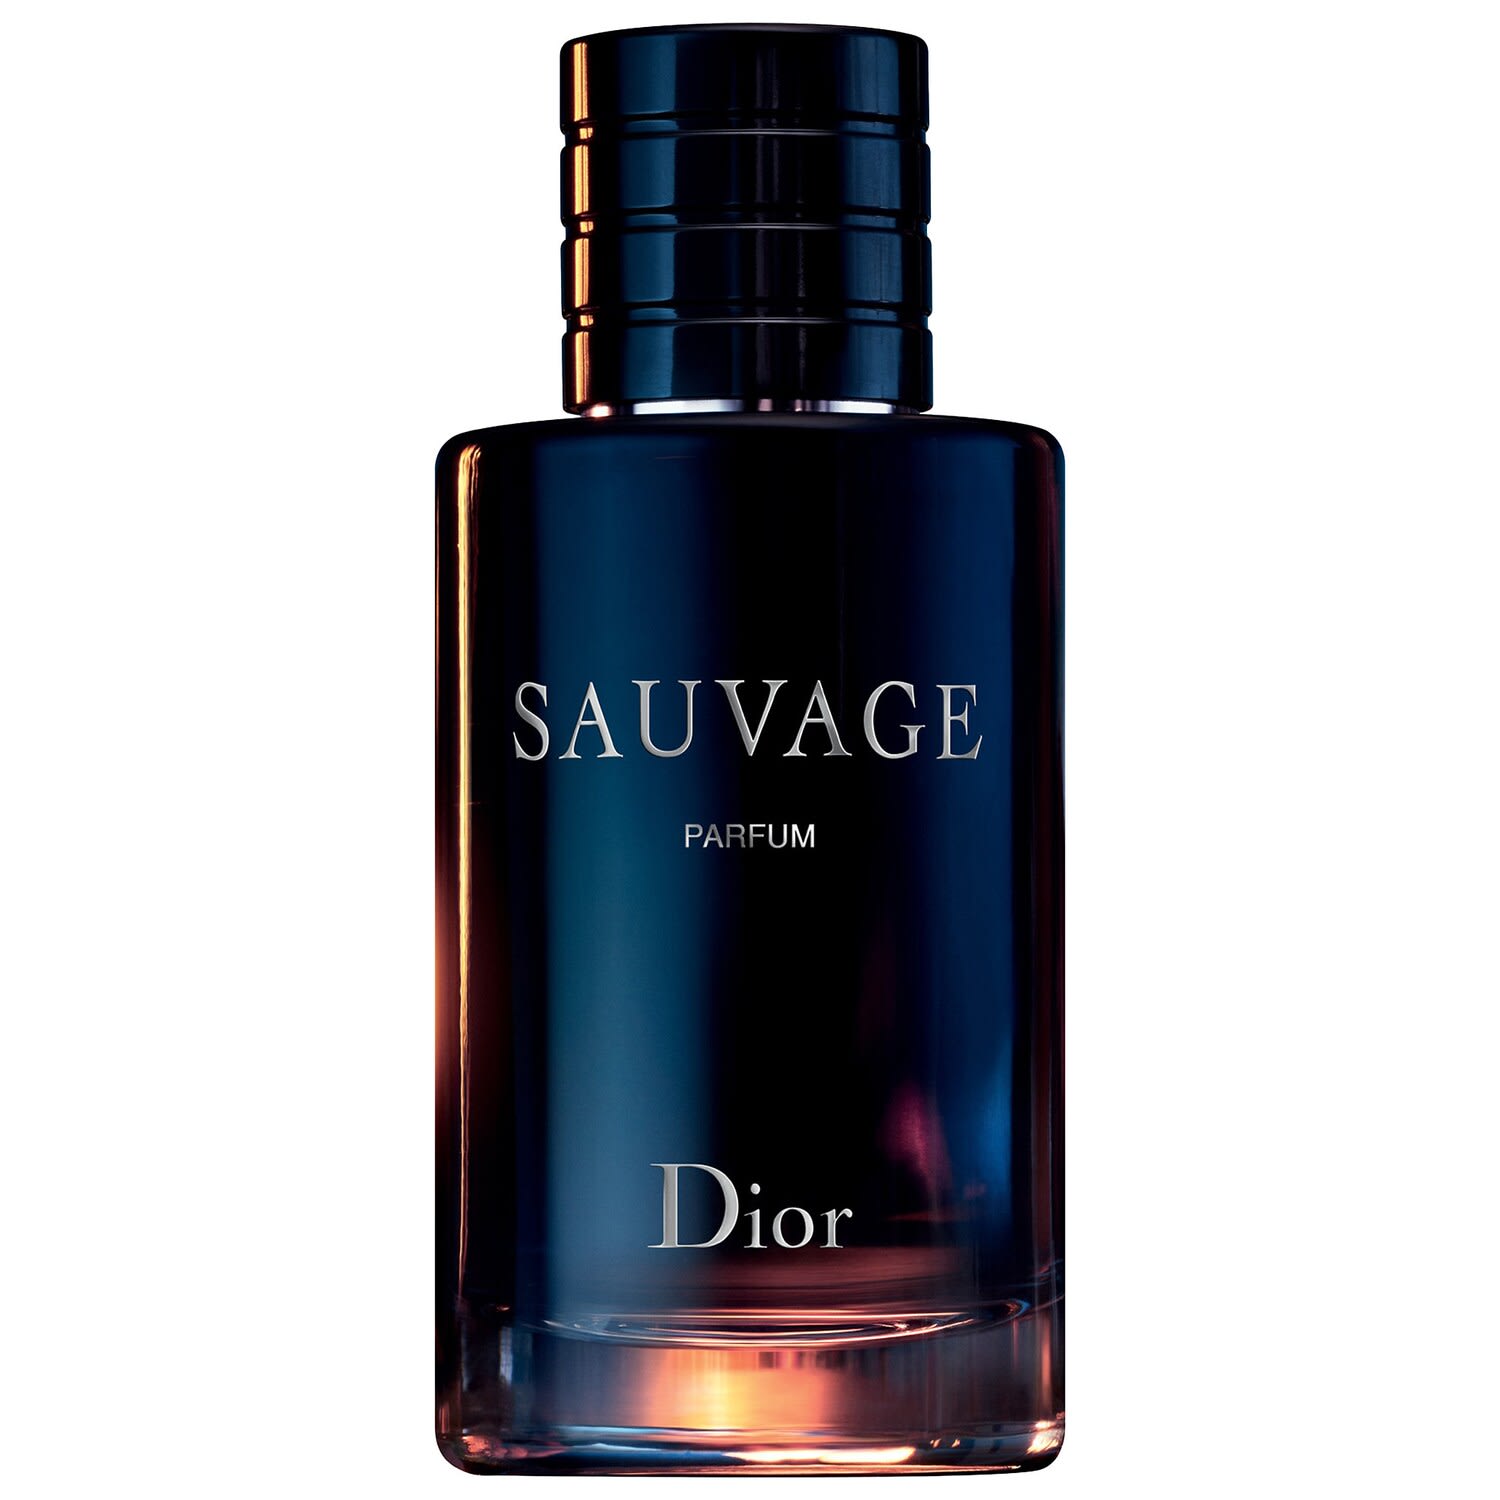 new dior fragrance 2019